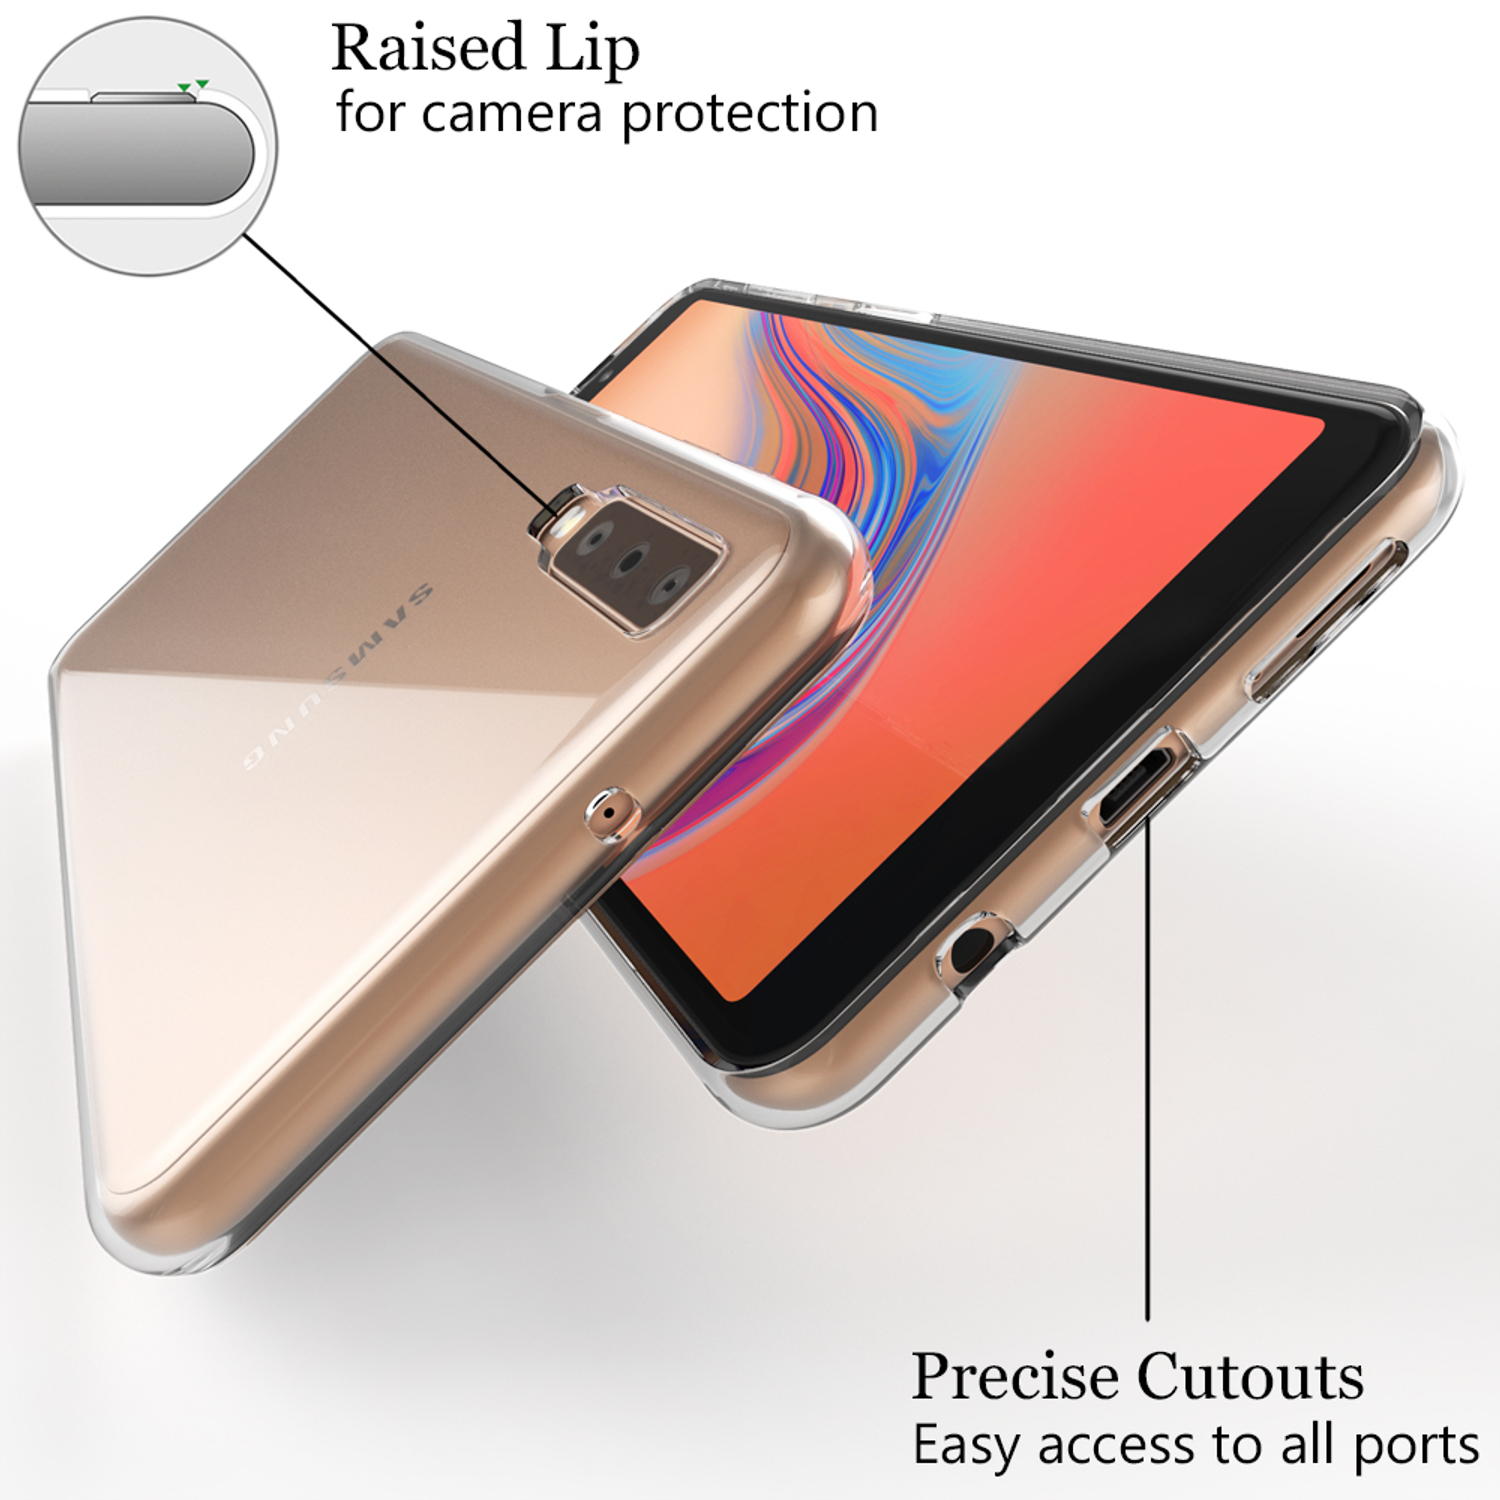 NALIA Samsung, Motiv A7 (2018), Mehrfarbig Silikon Hülle, Backcover, Galaxy